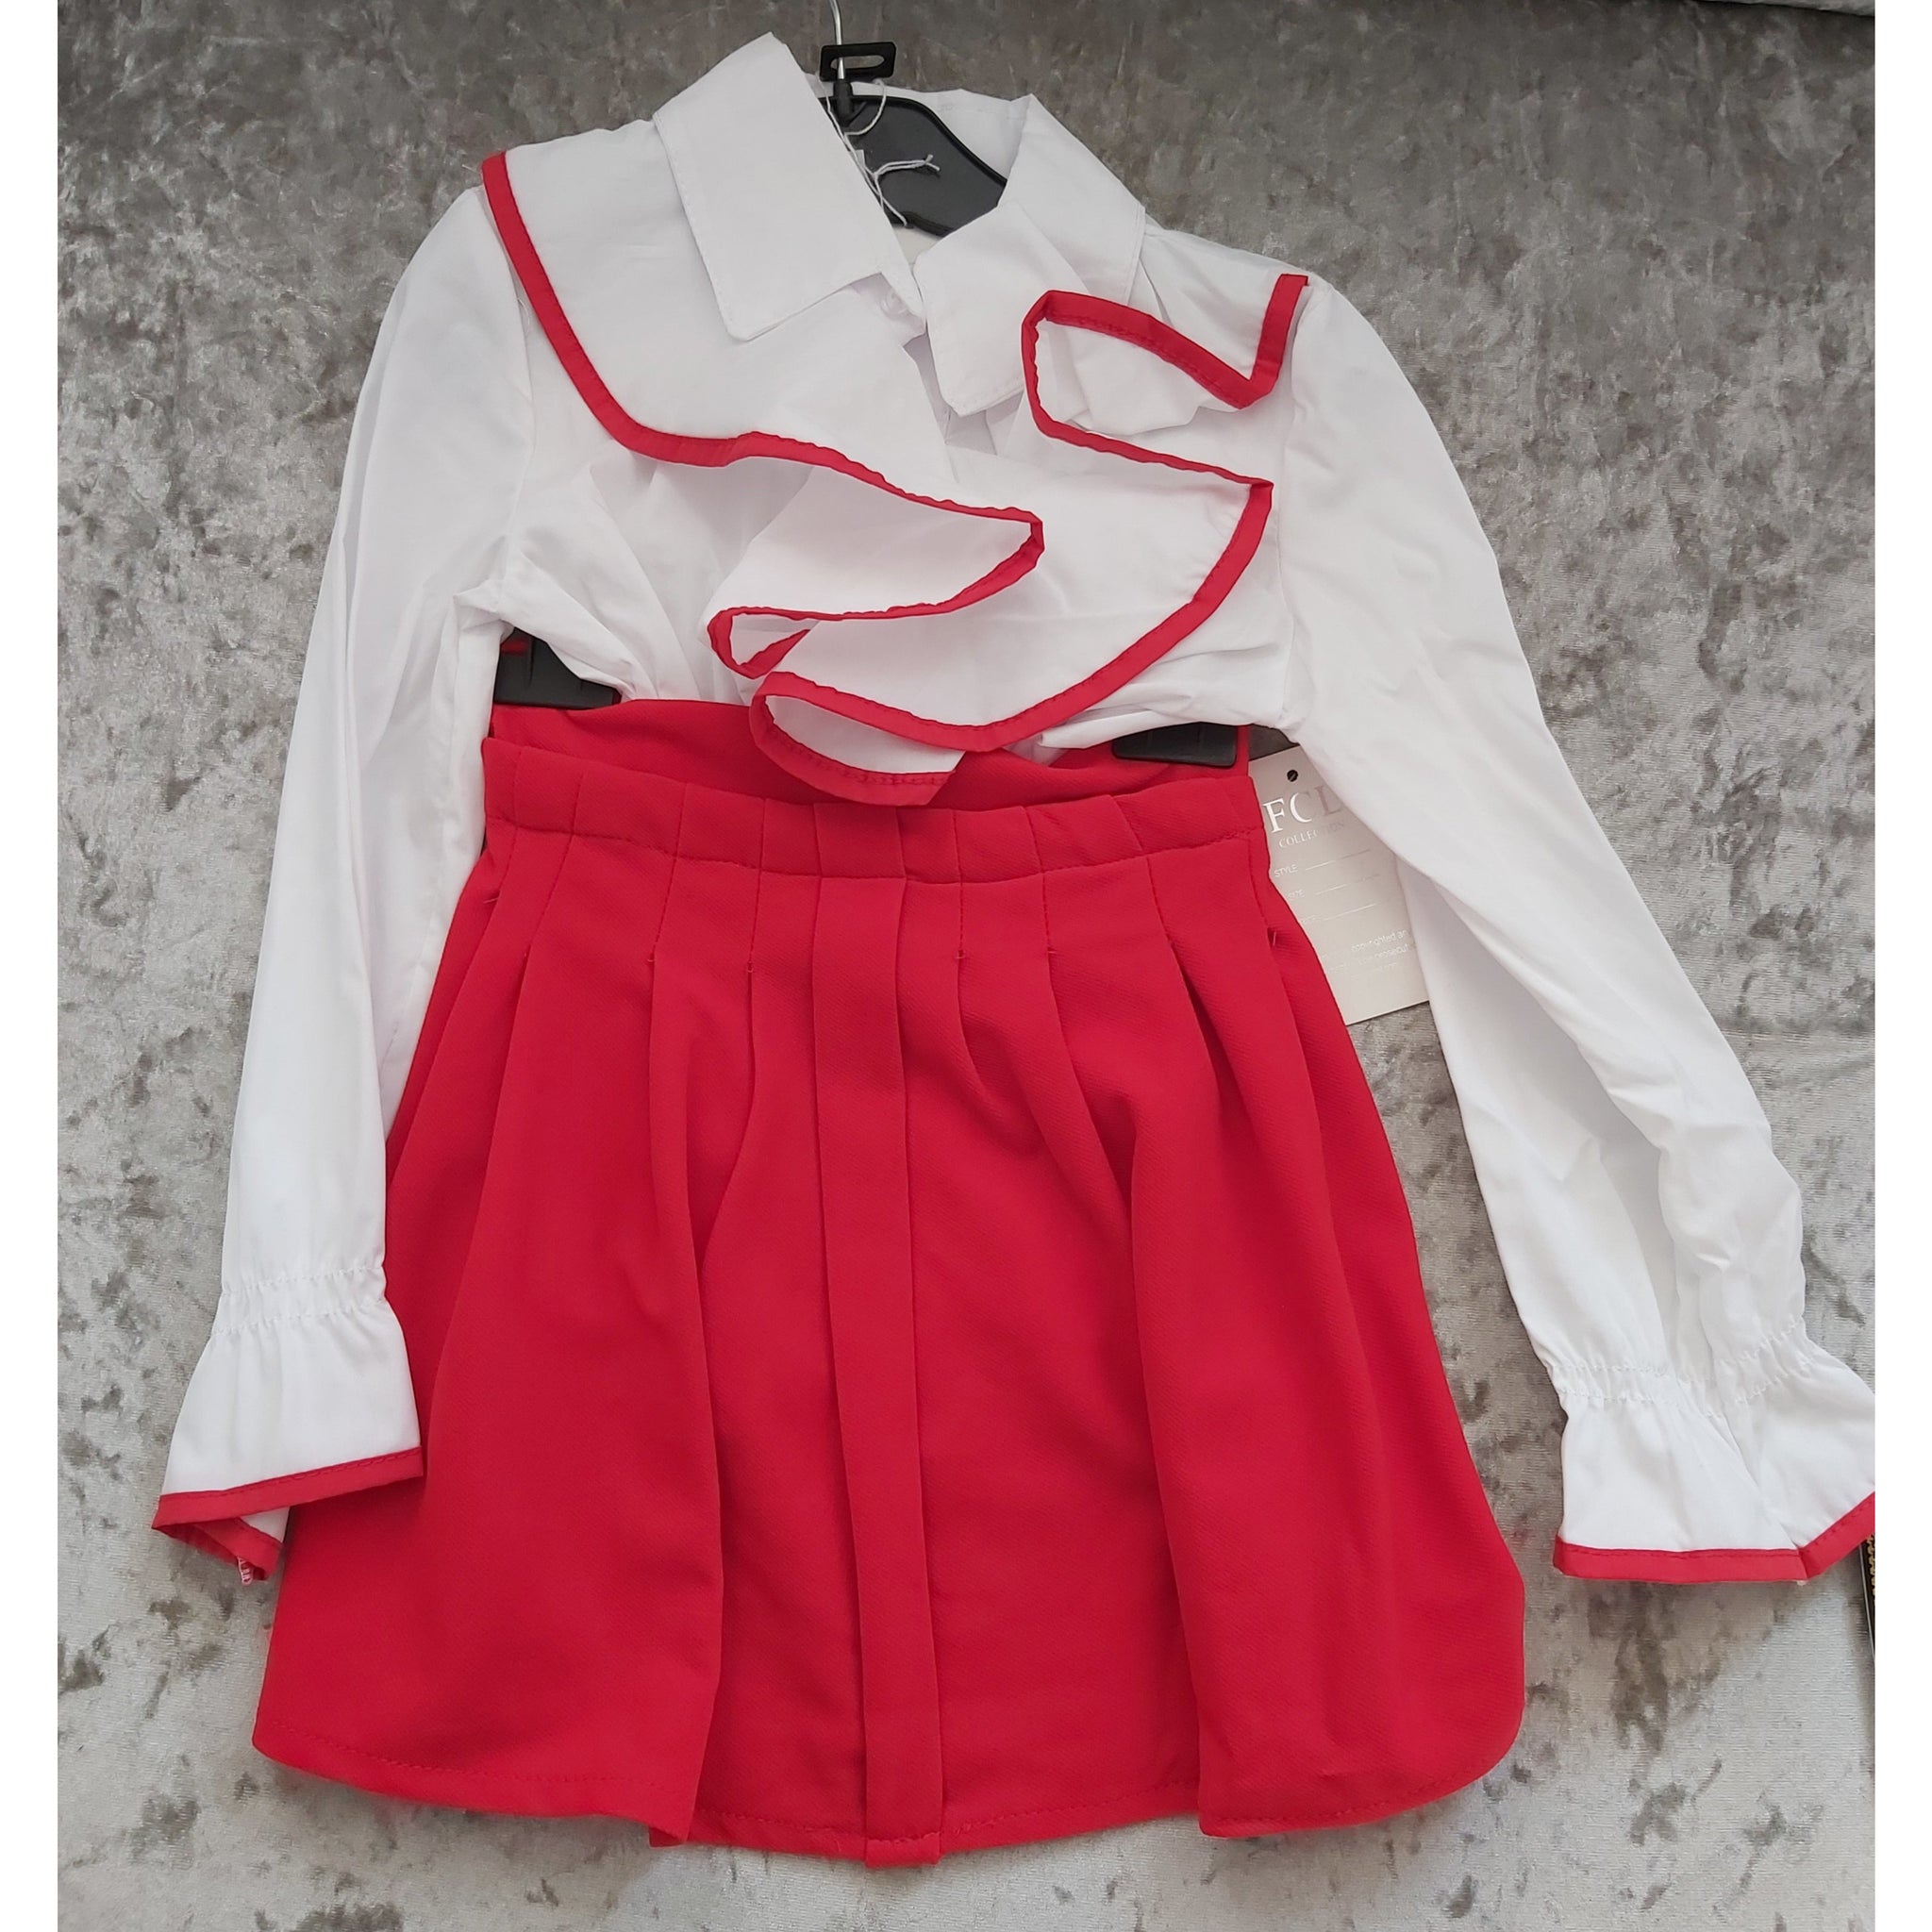 Ruffle Shirt & Red Skirt Set